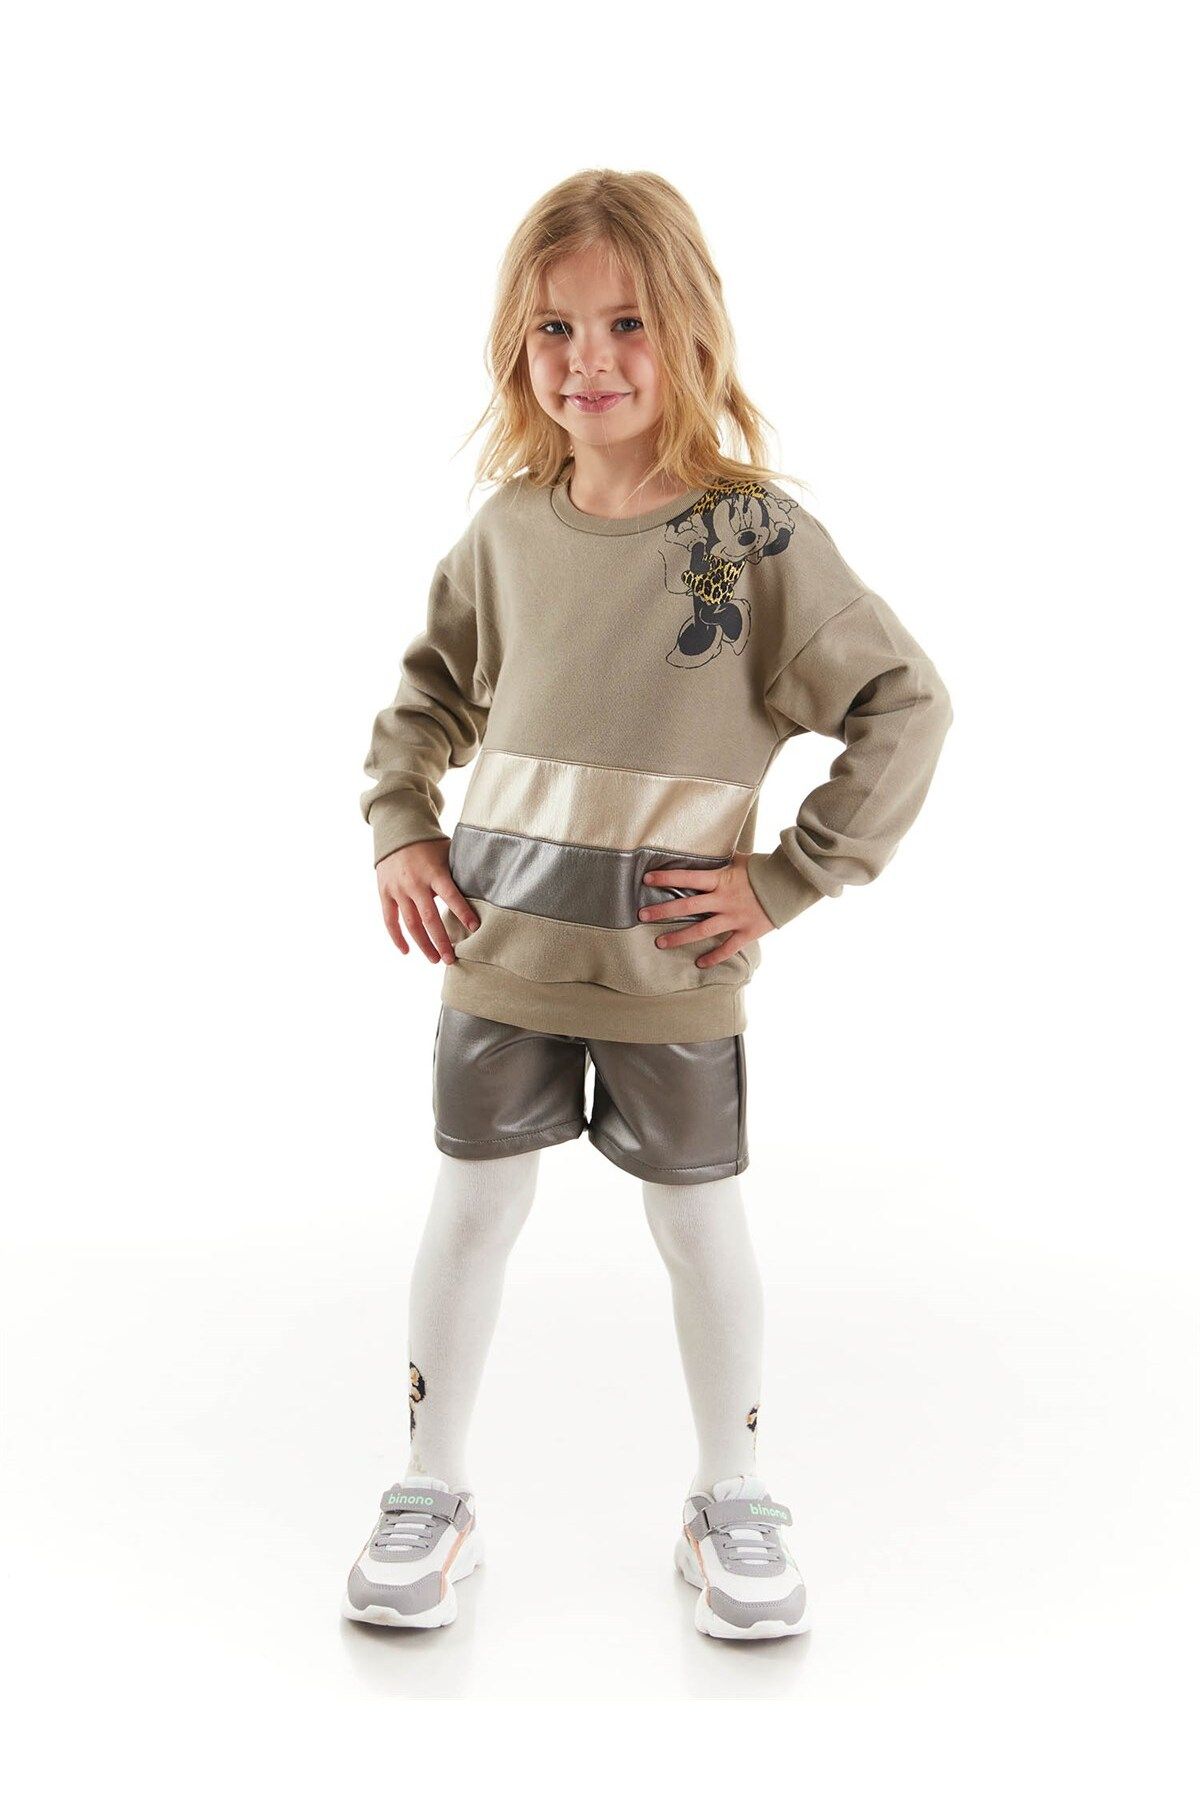 MINNIE MOUSE Minnie Lisanslı Kız Çocuk Sweatshirt Deri Tayt Ve Külotlu Çorap 3'lü Takım 20193